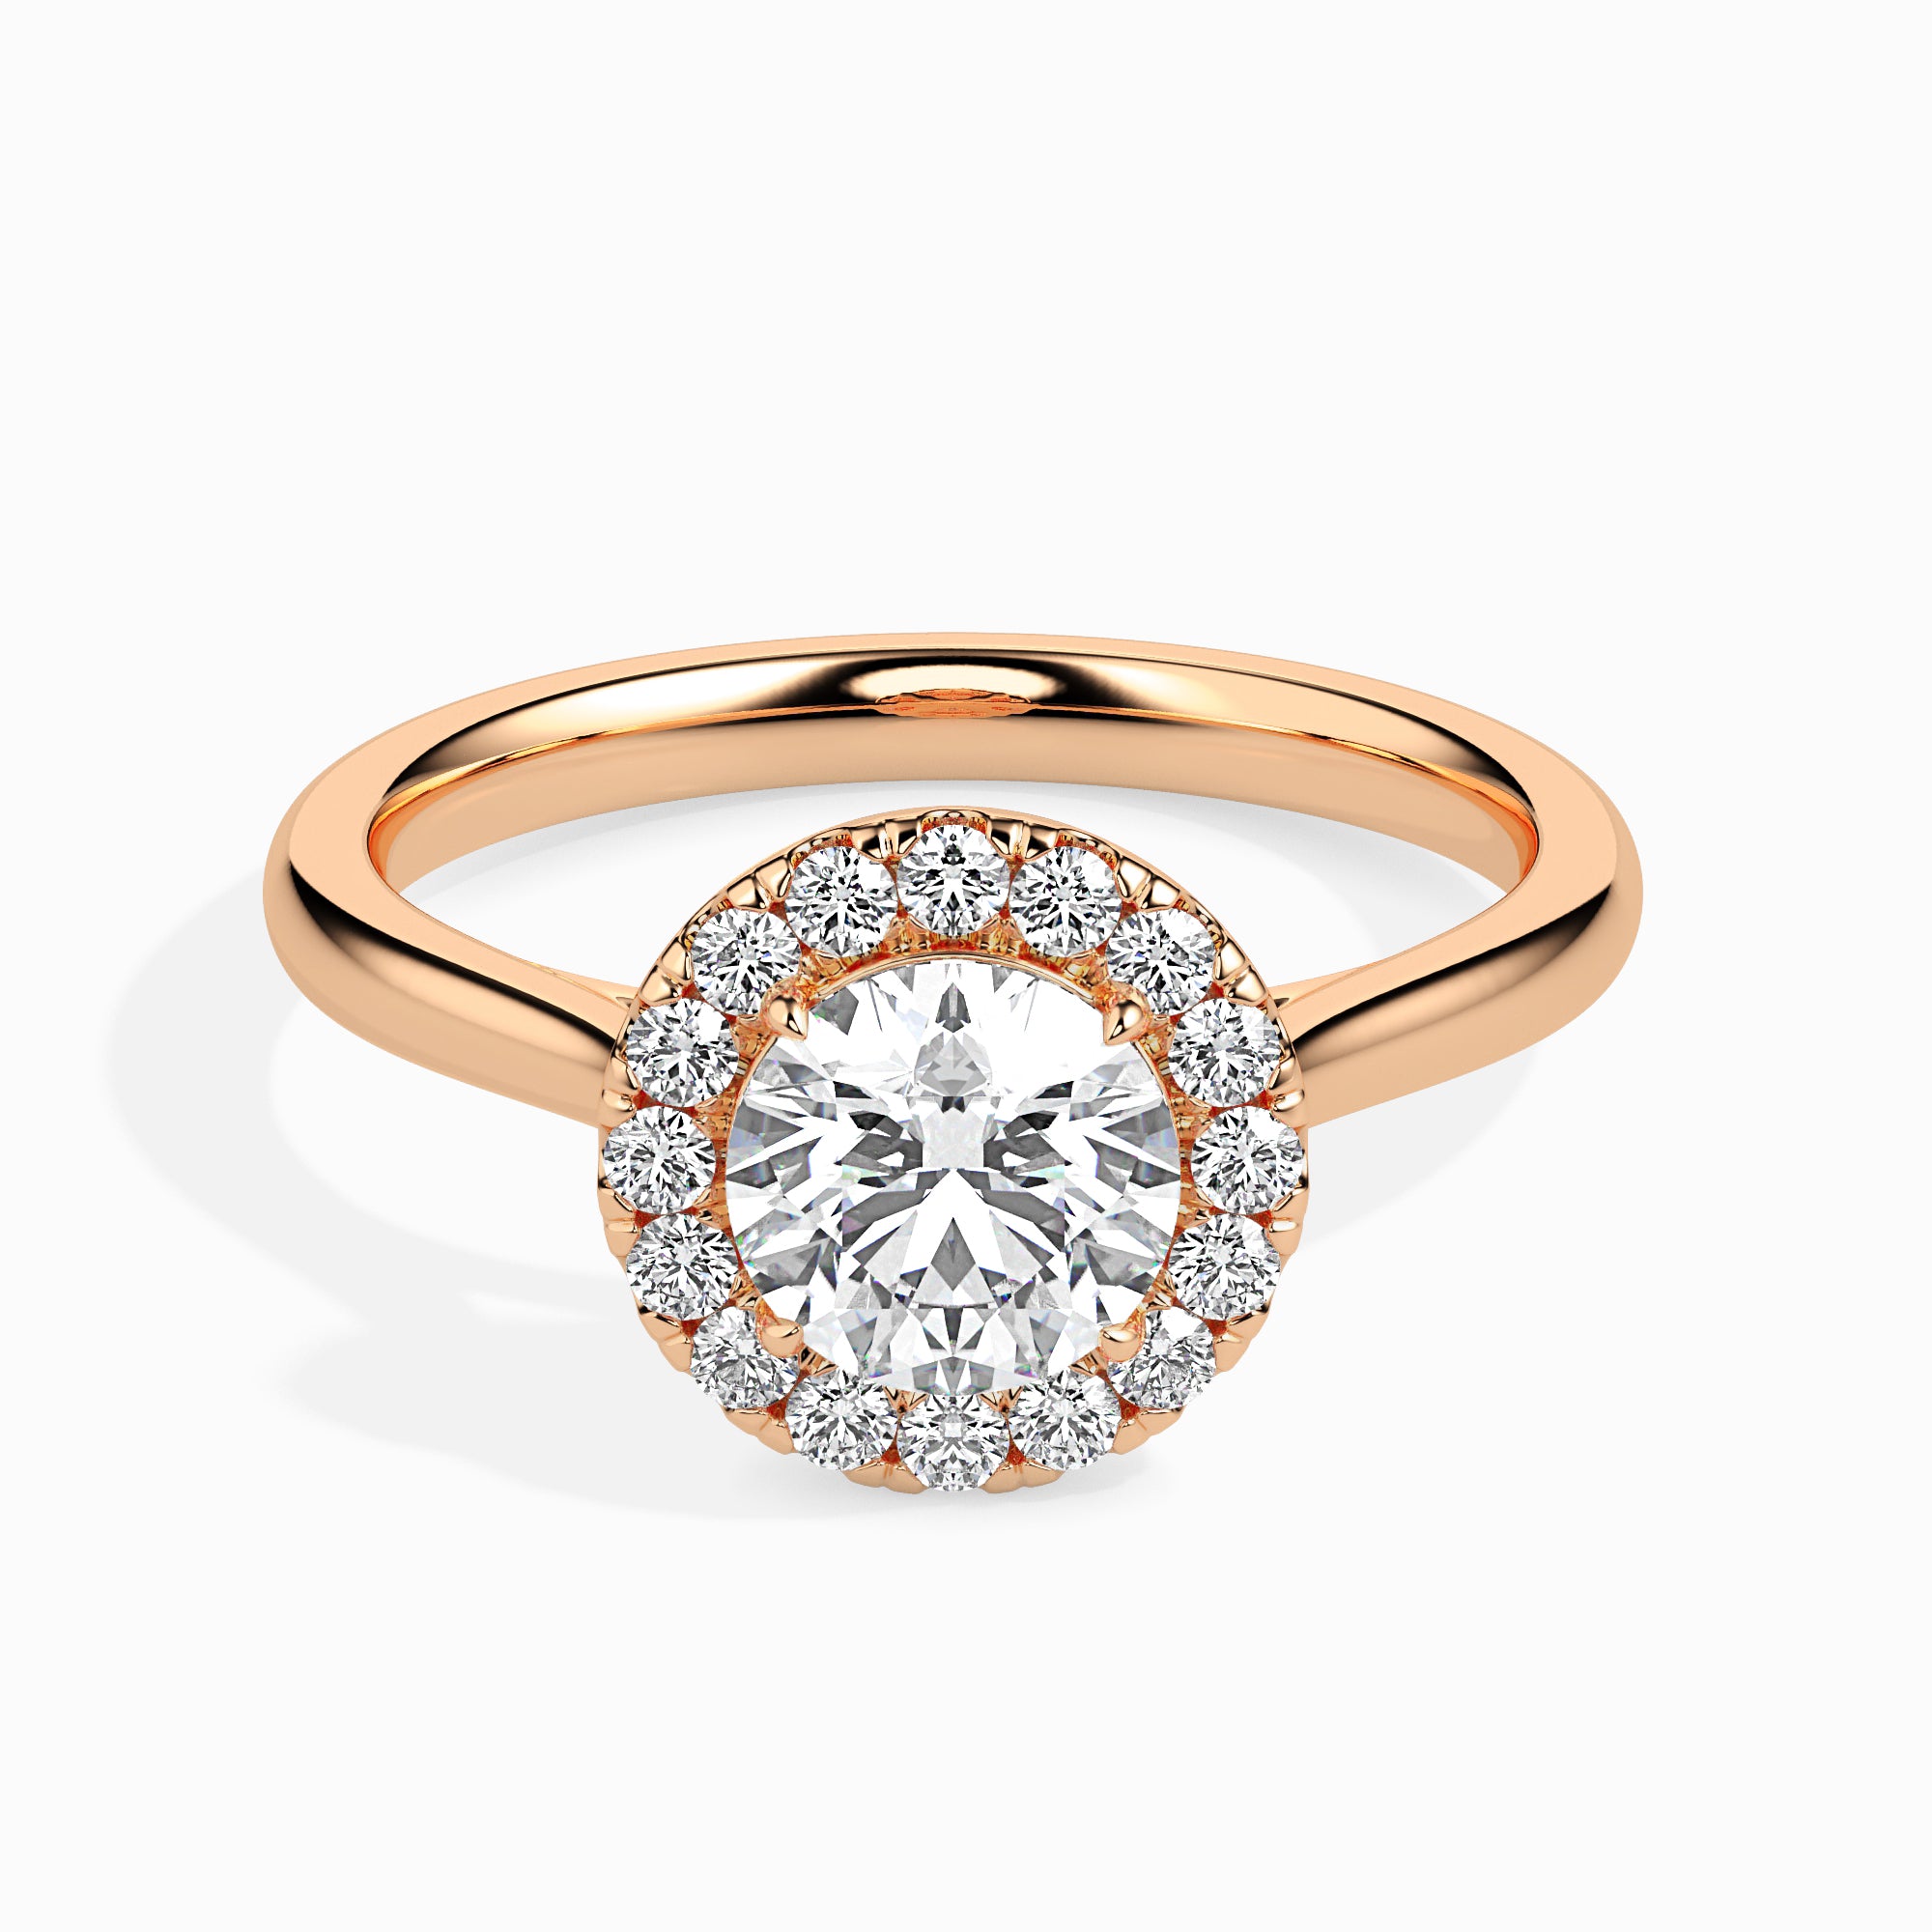 1-Carat Solitaire Diamond Shank 18K Rose Gold Ring JL AU LG G 19021R-B